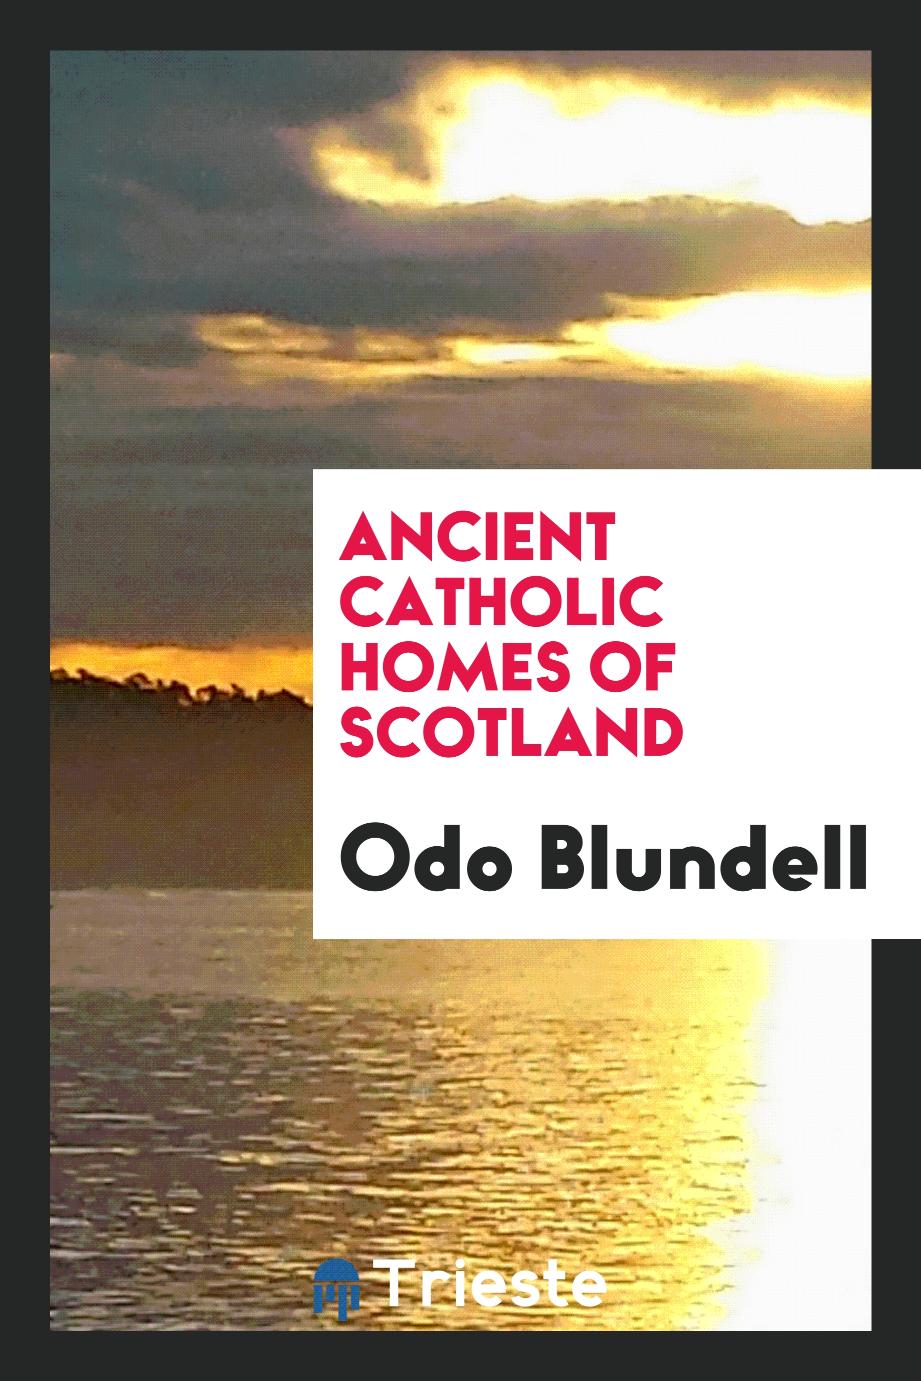 Ancient Catholic homes of Scotland